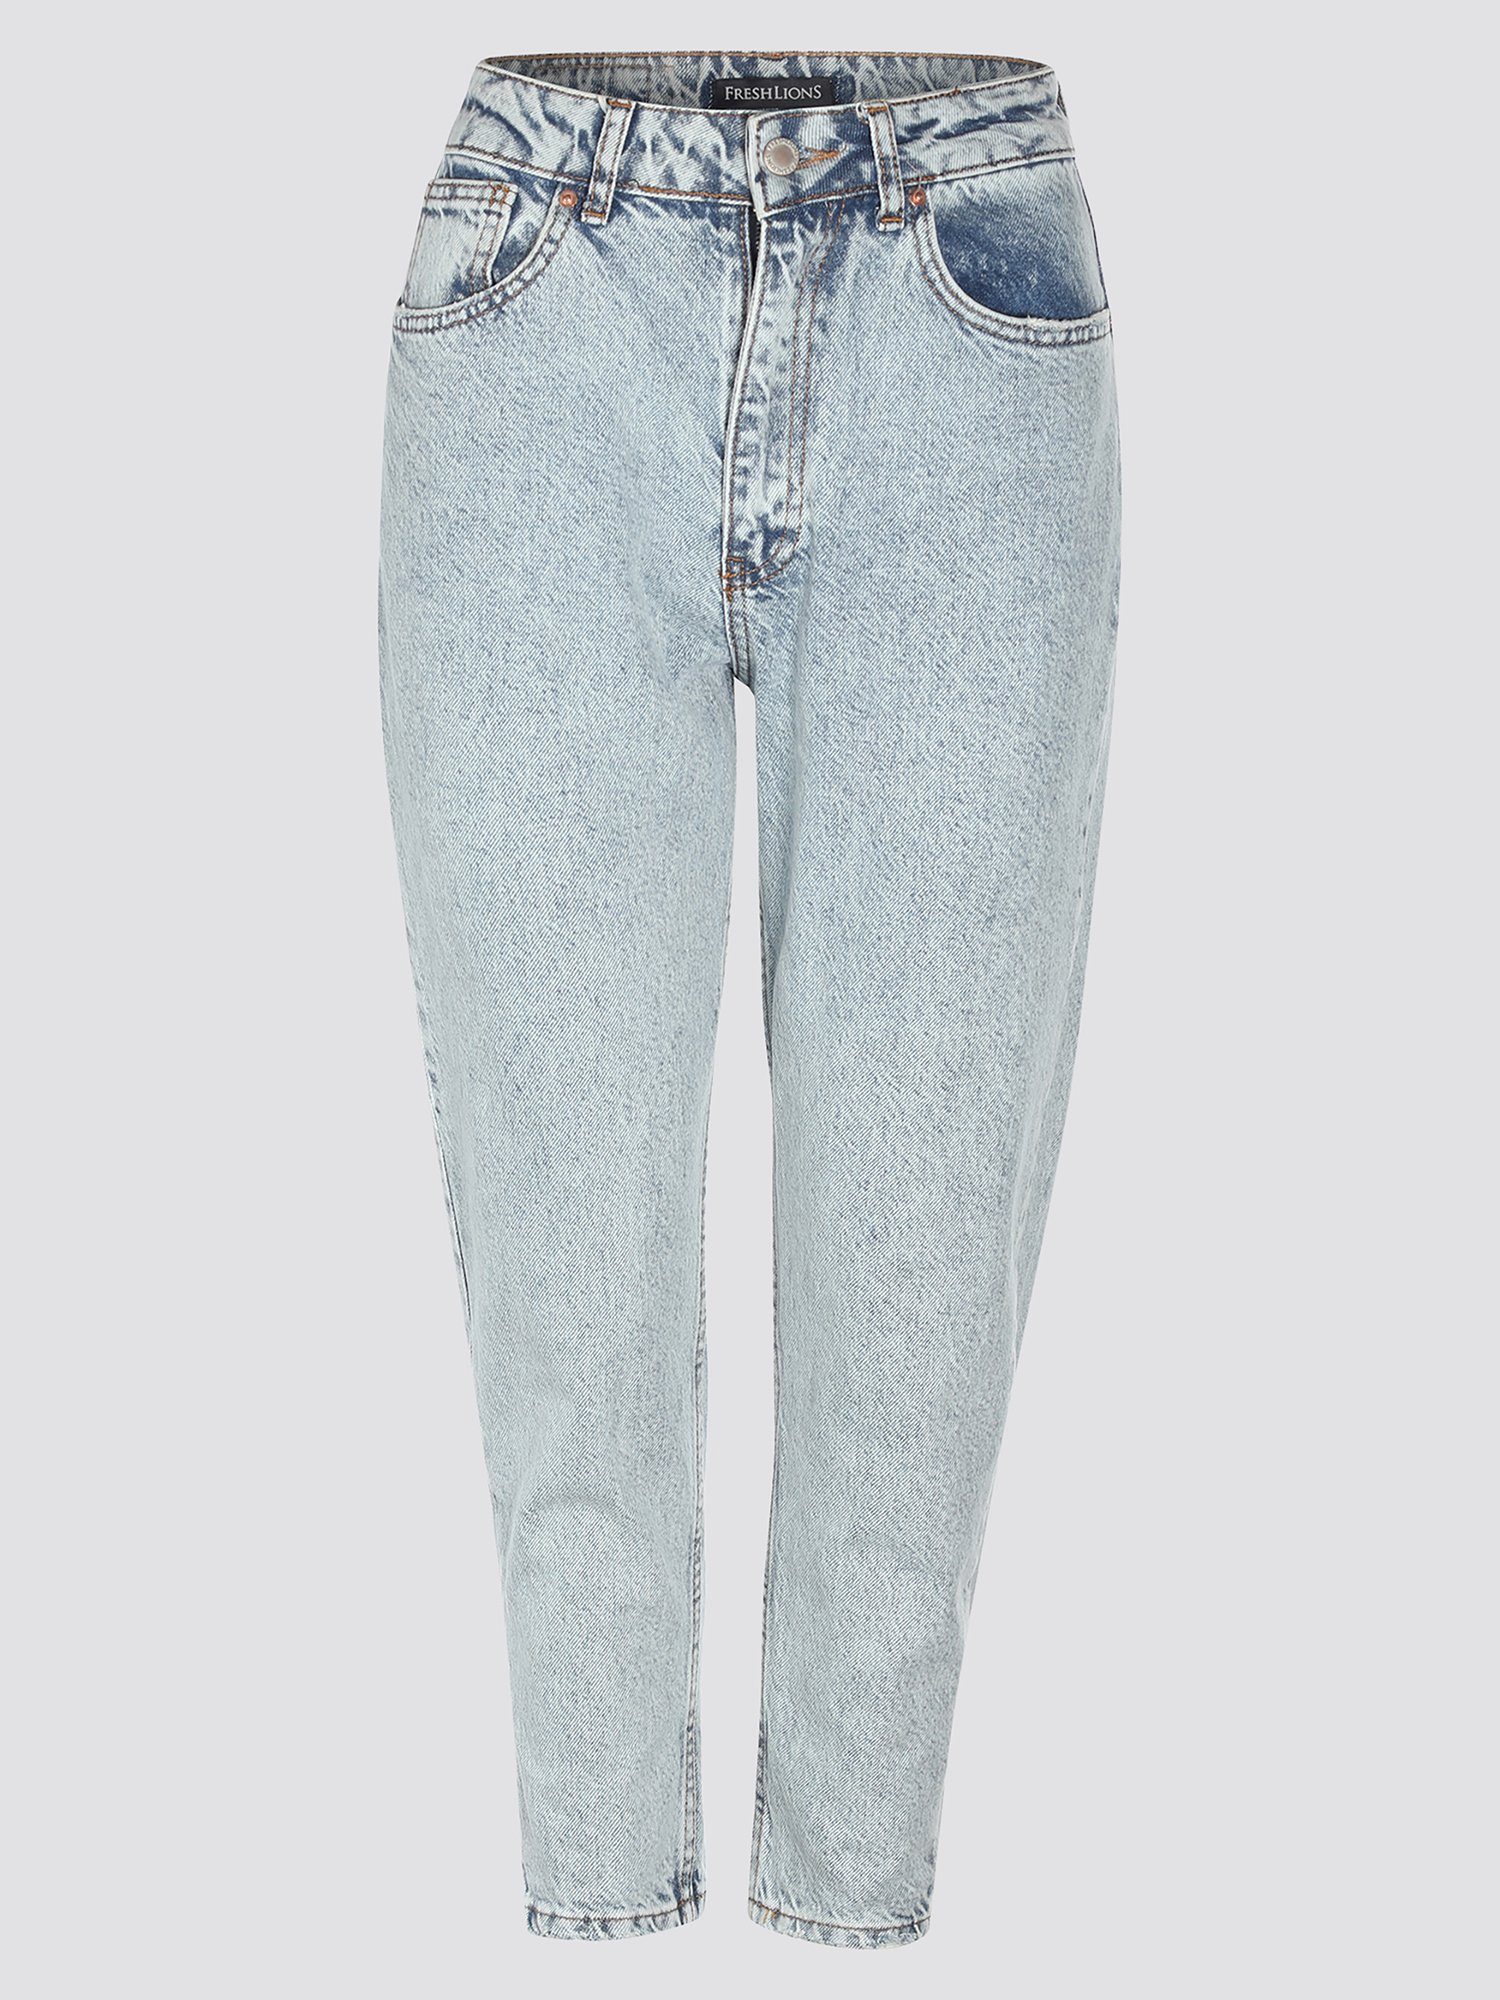 Freshlions Mom-Jeans Blau 'HAYLIE' Jeans